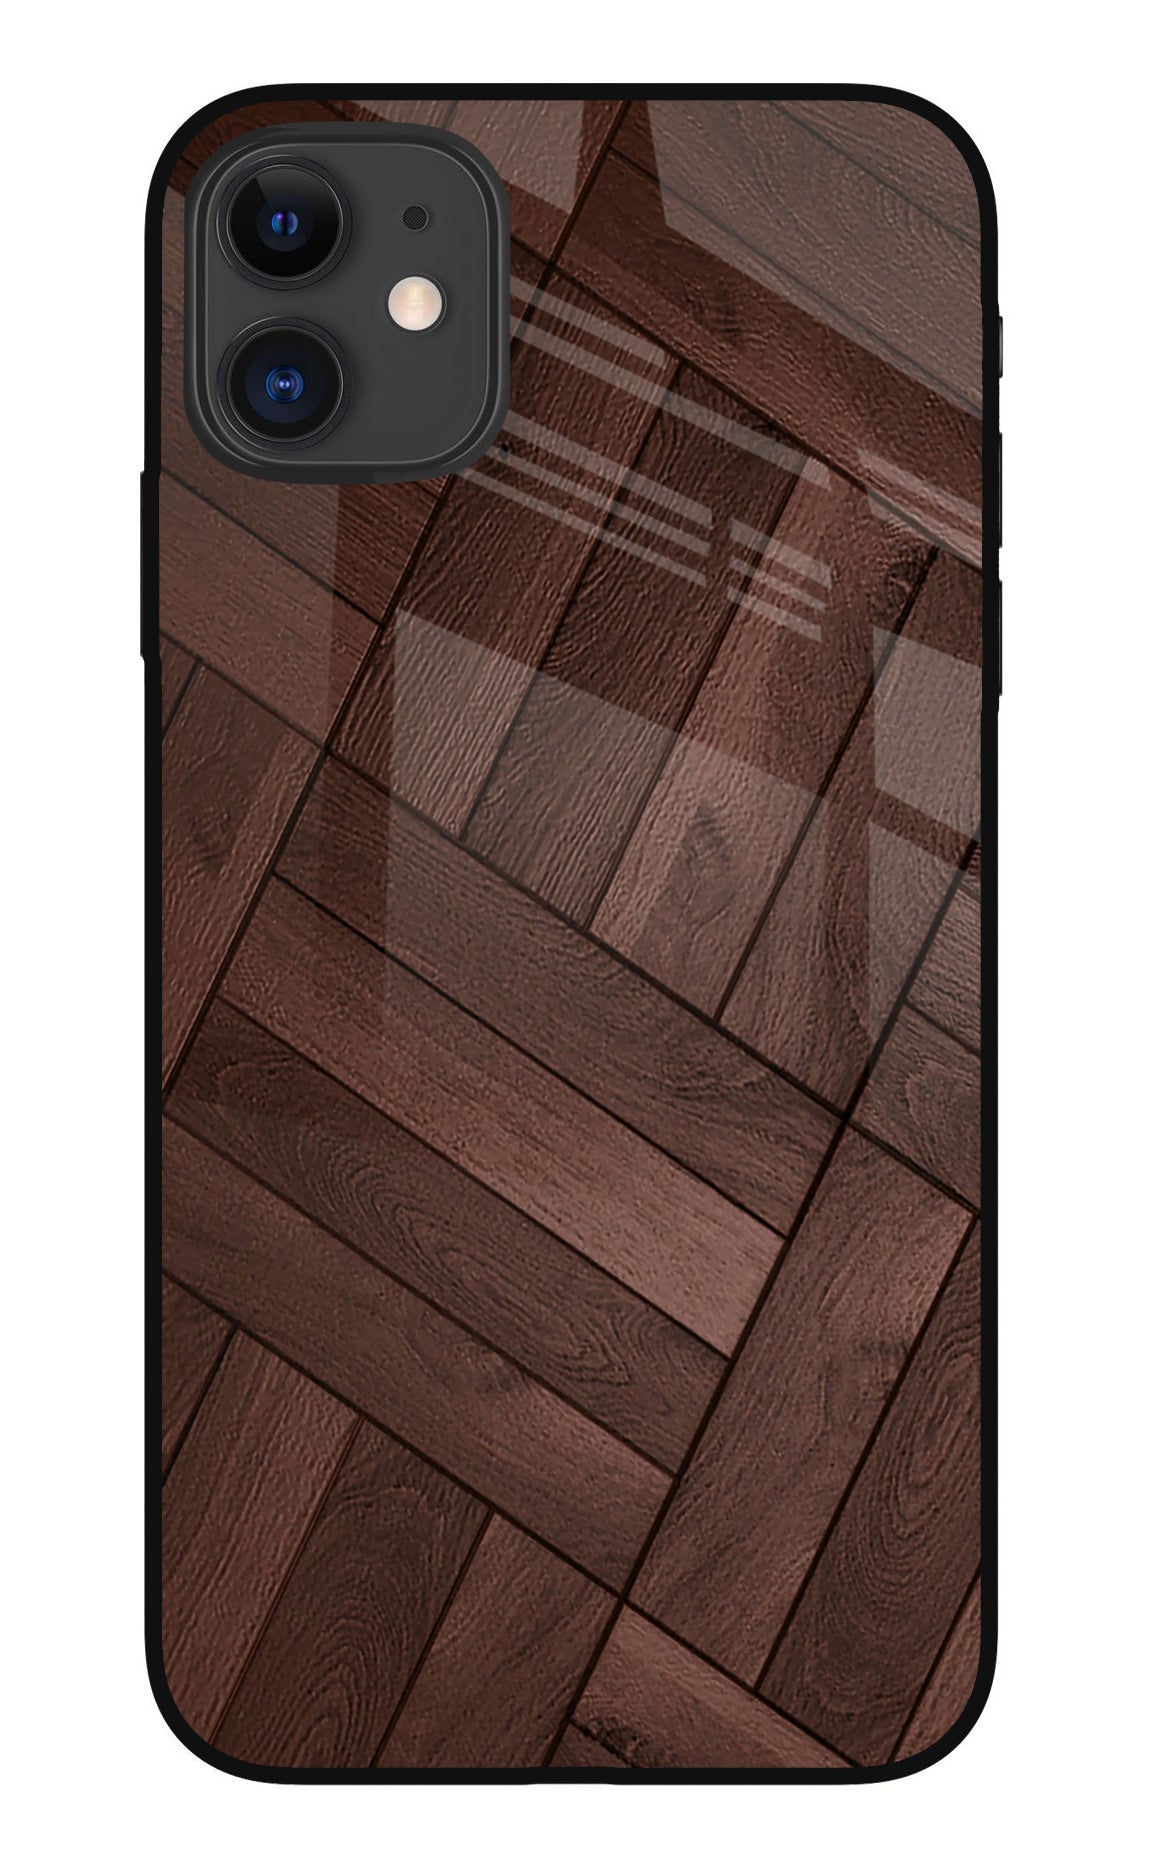 Wooden Texture Design iPhone 11 Glass Case